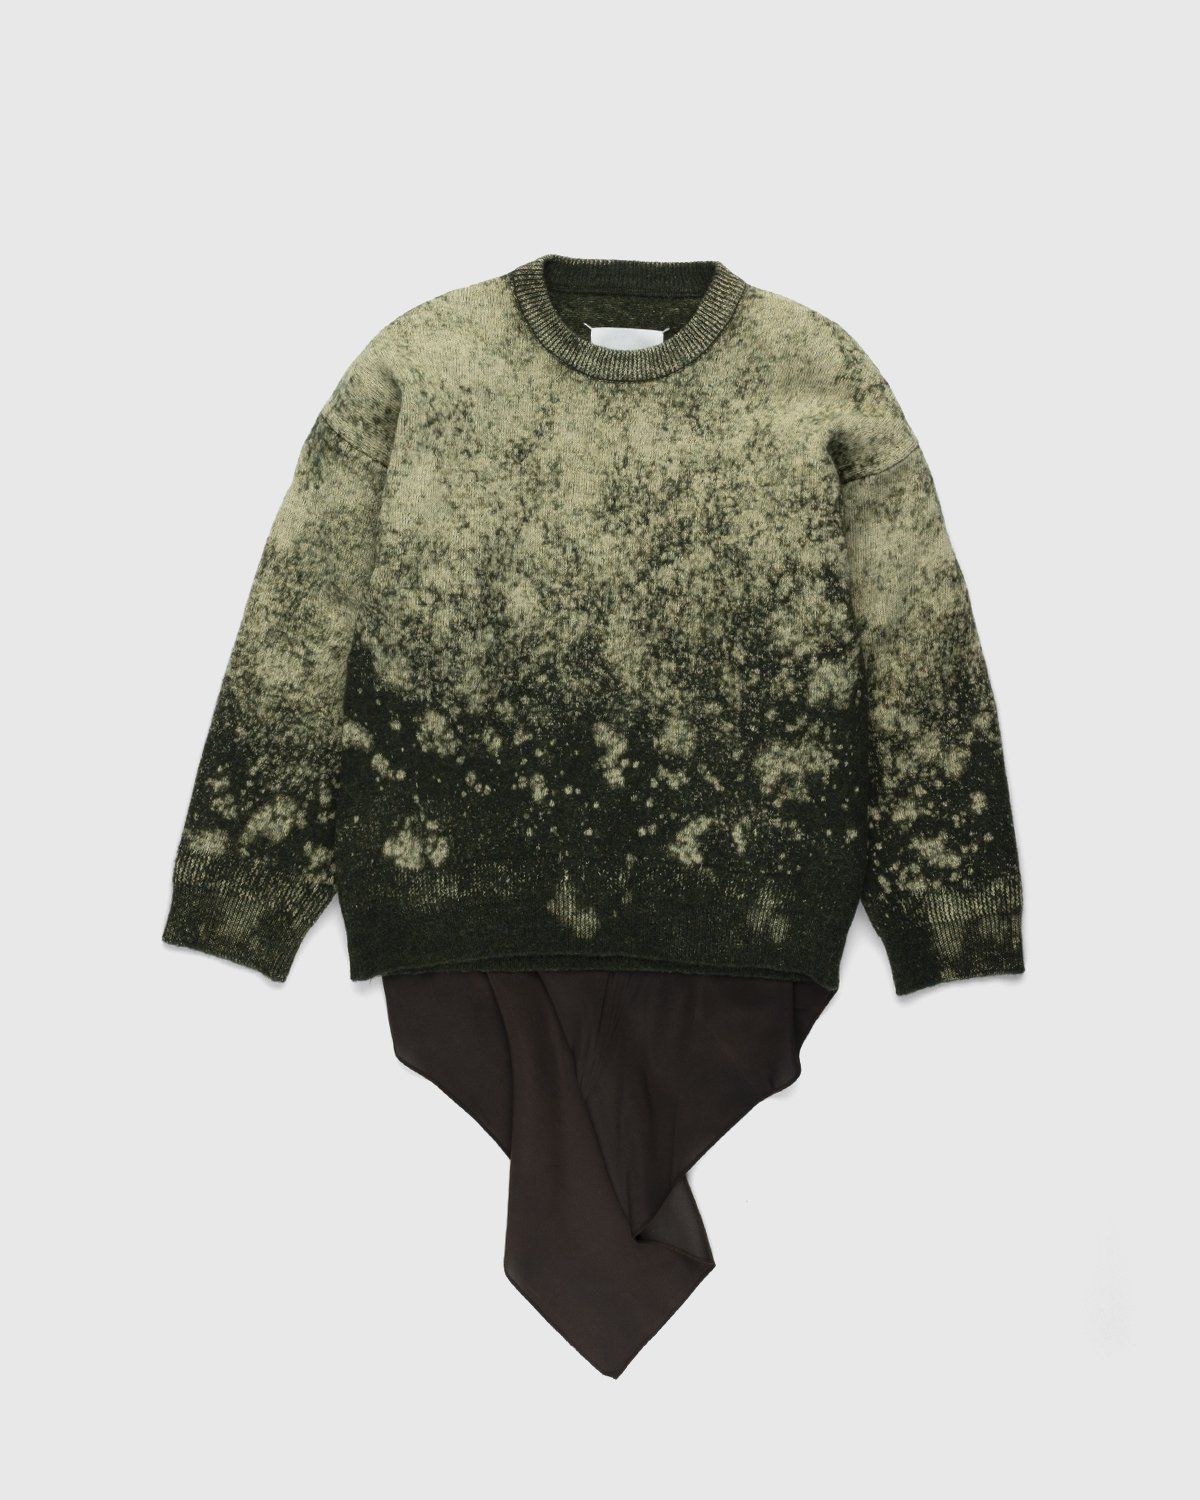 Maison Margiela – Discharged Wool Sweater - Knitwear - Green - Image 2